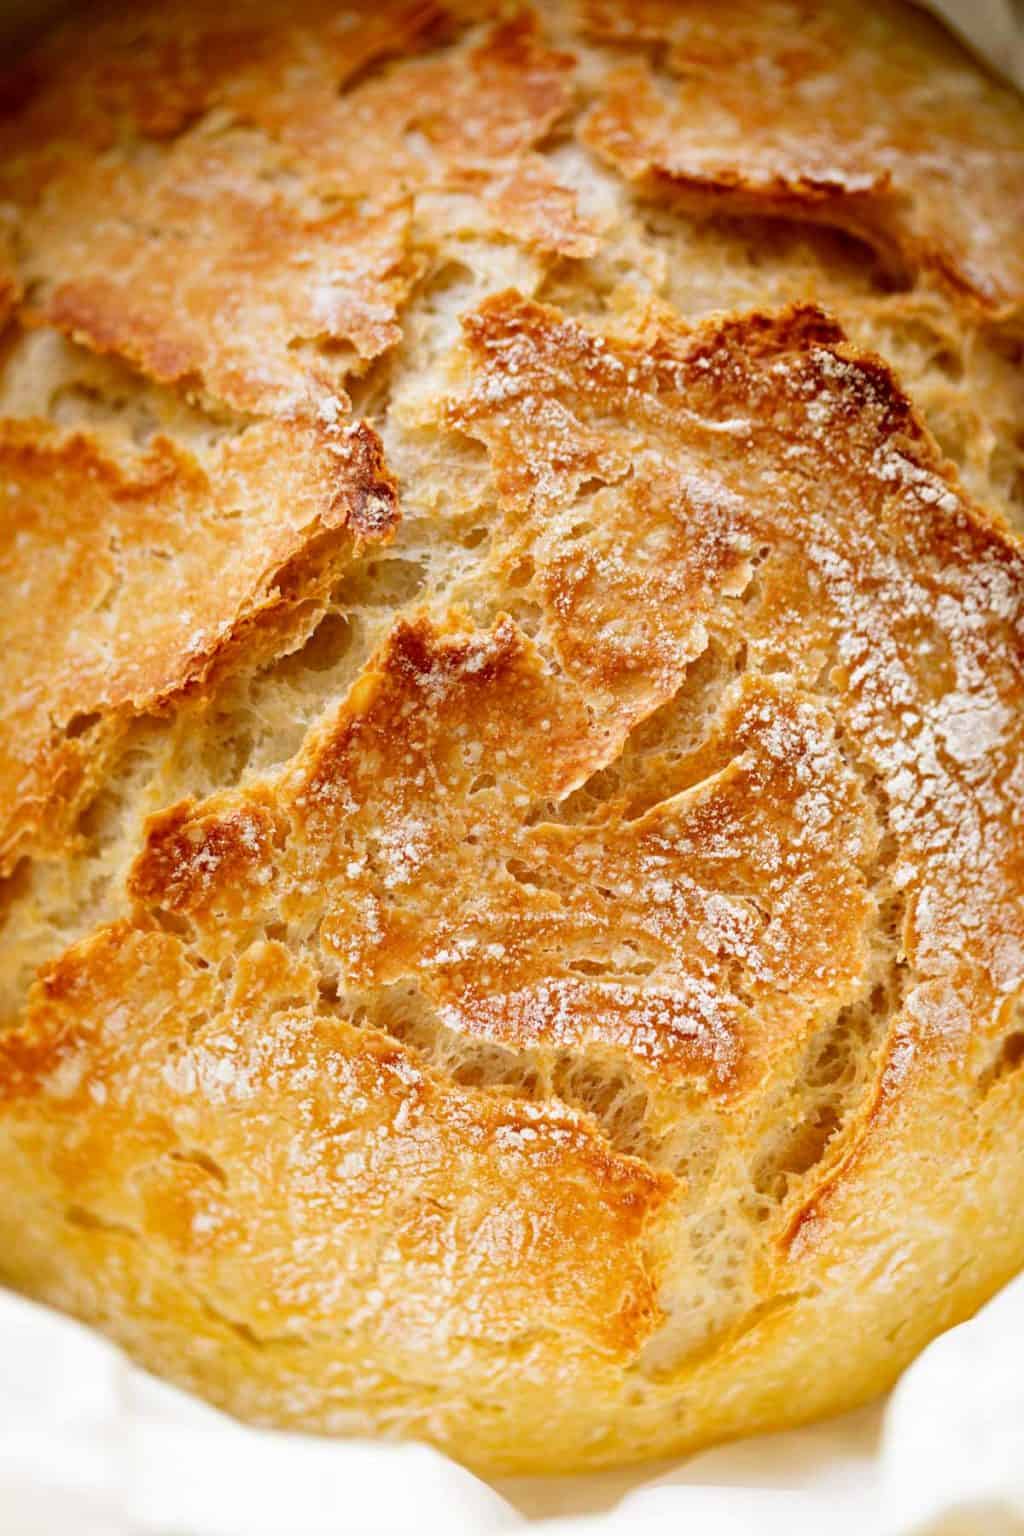 artisan bread recipes for home baking